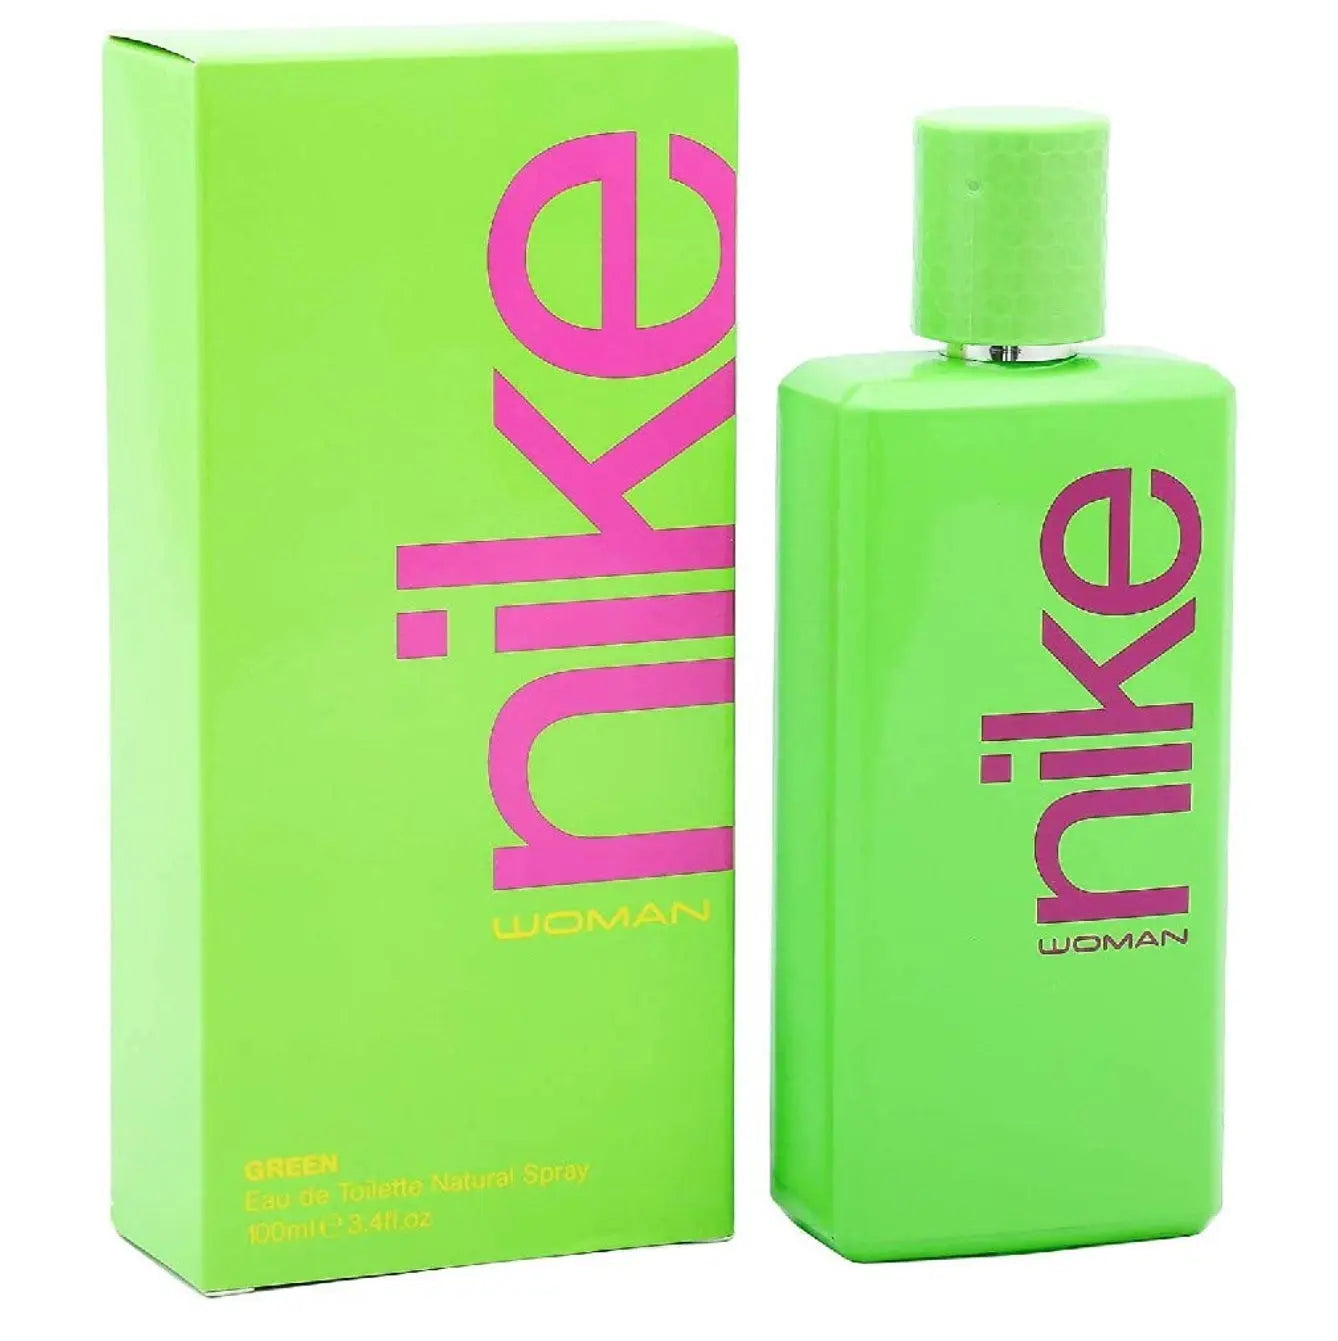 NIKE Green Woman Eau De Toilette 100ml Imported Perfumes & Beauty Store